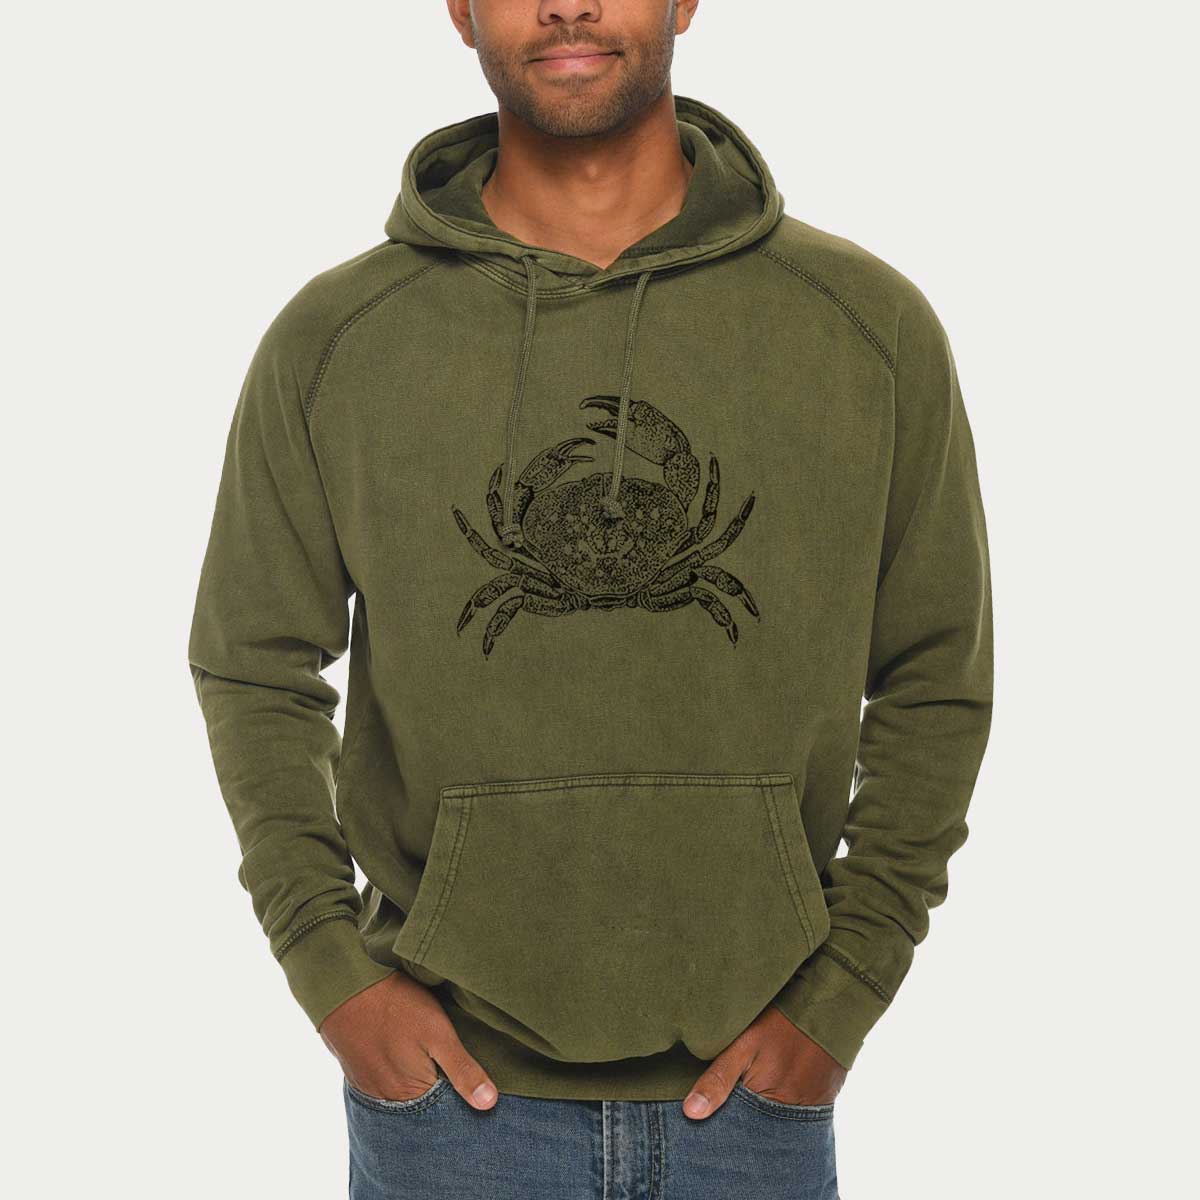 Dungeness Crab  - Mid-Weight Unisex Vintage 100% Cotton Hoodie